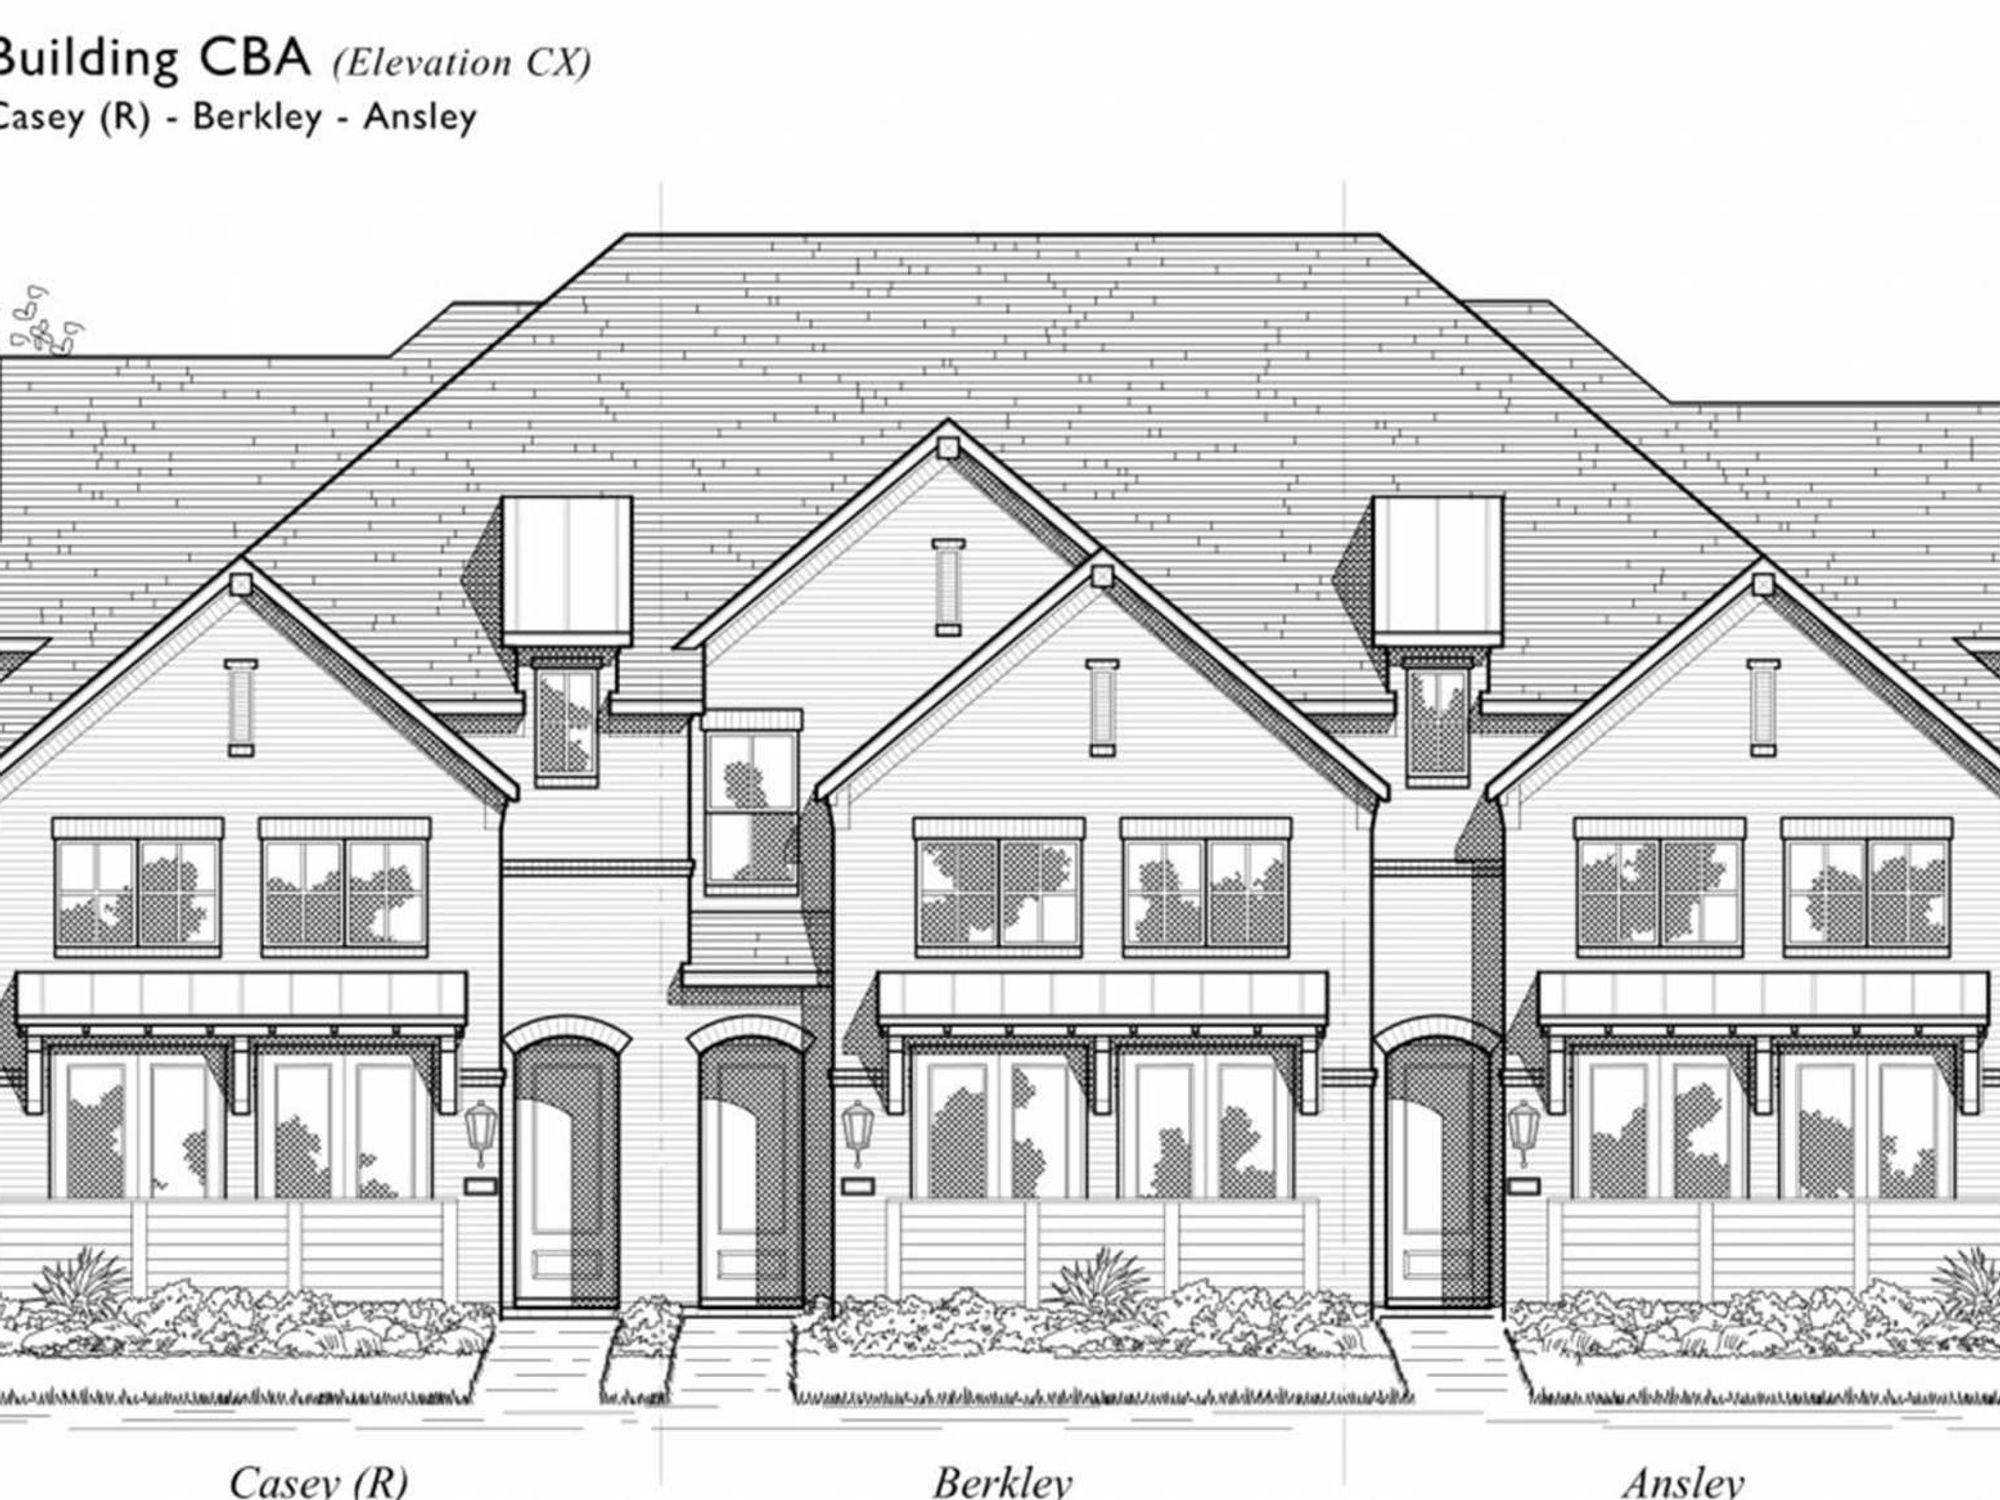 Coming soon: three new townhouse floorplans.